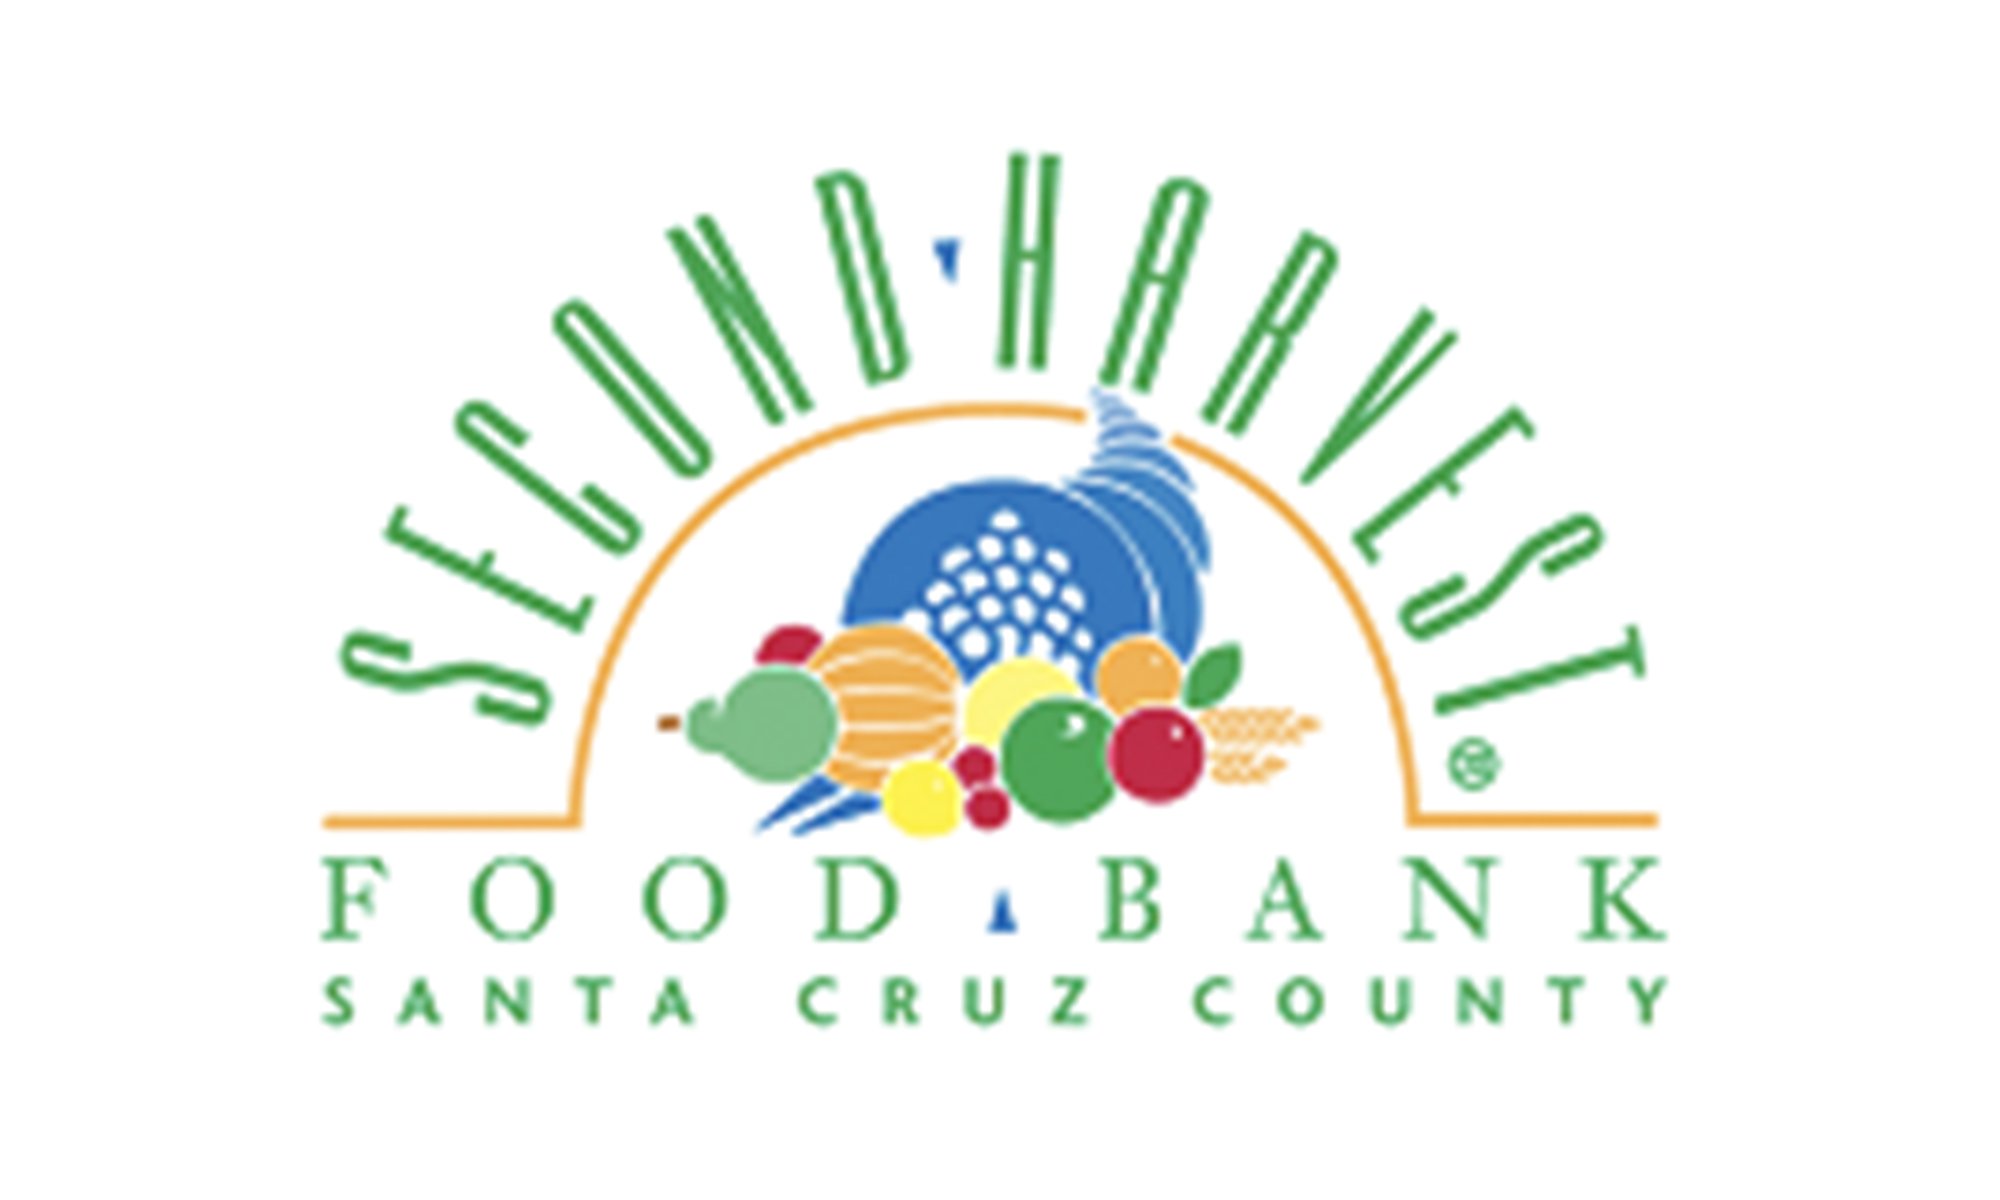 Food Bank Santa Cruz County